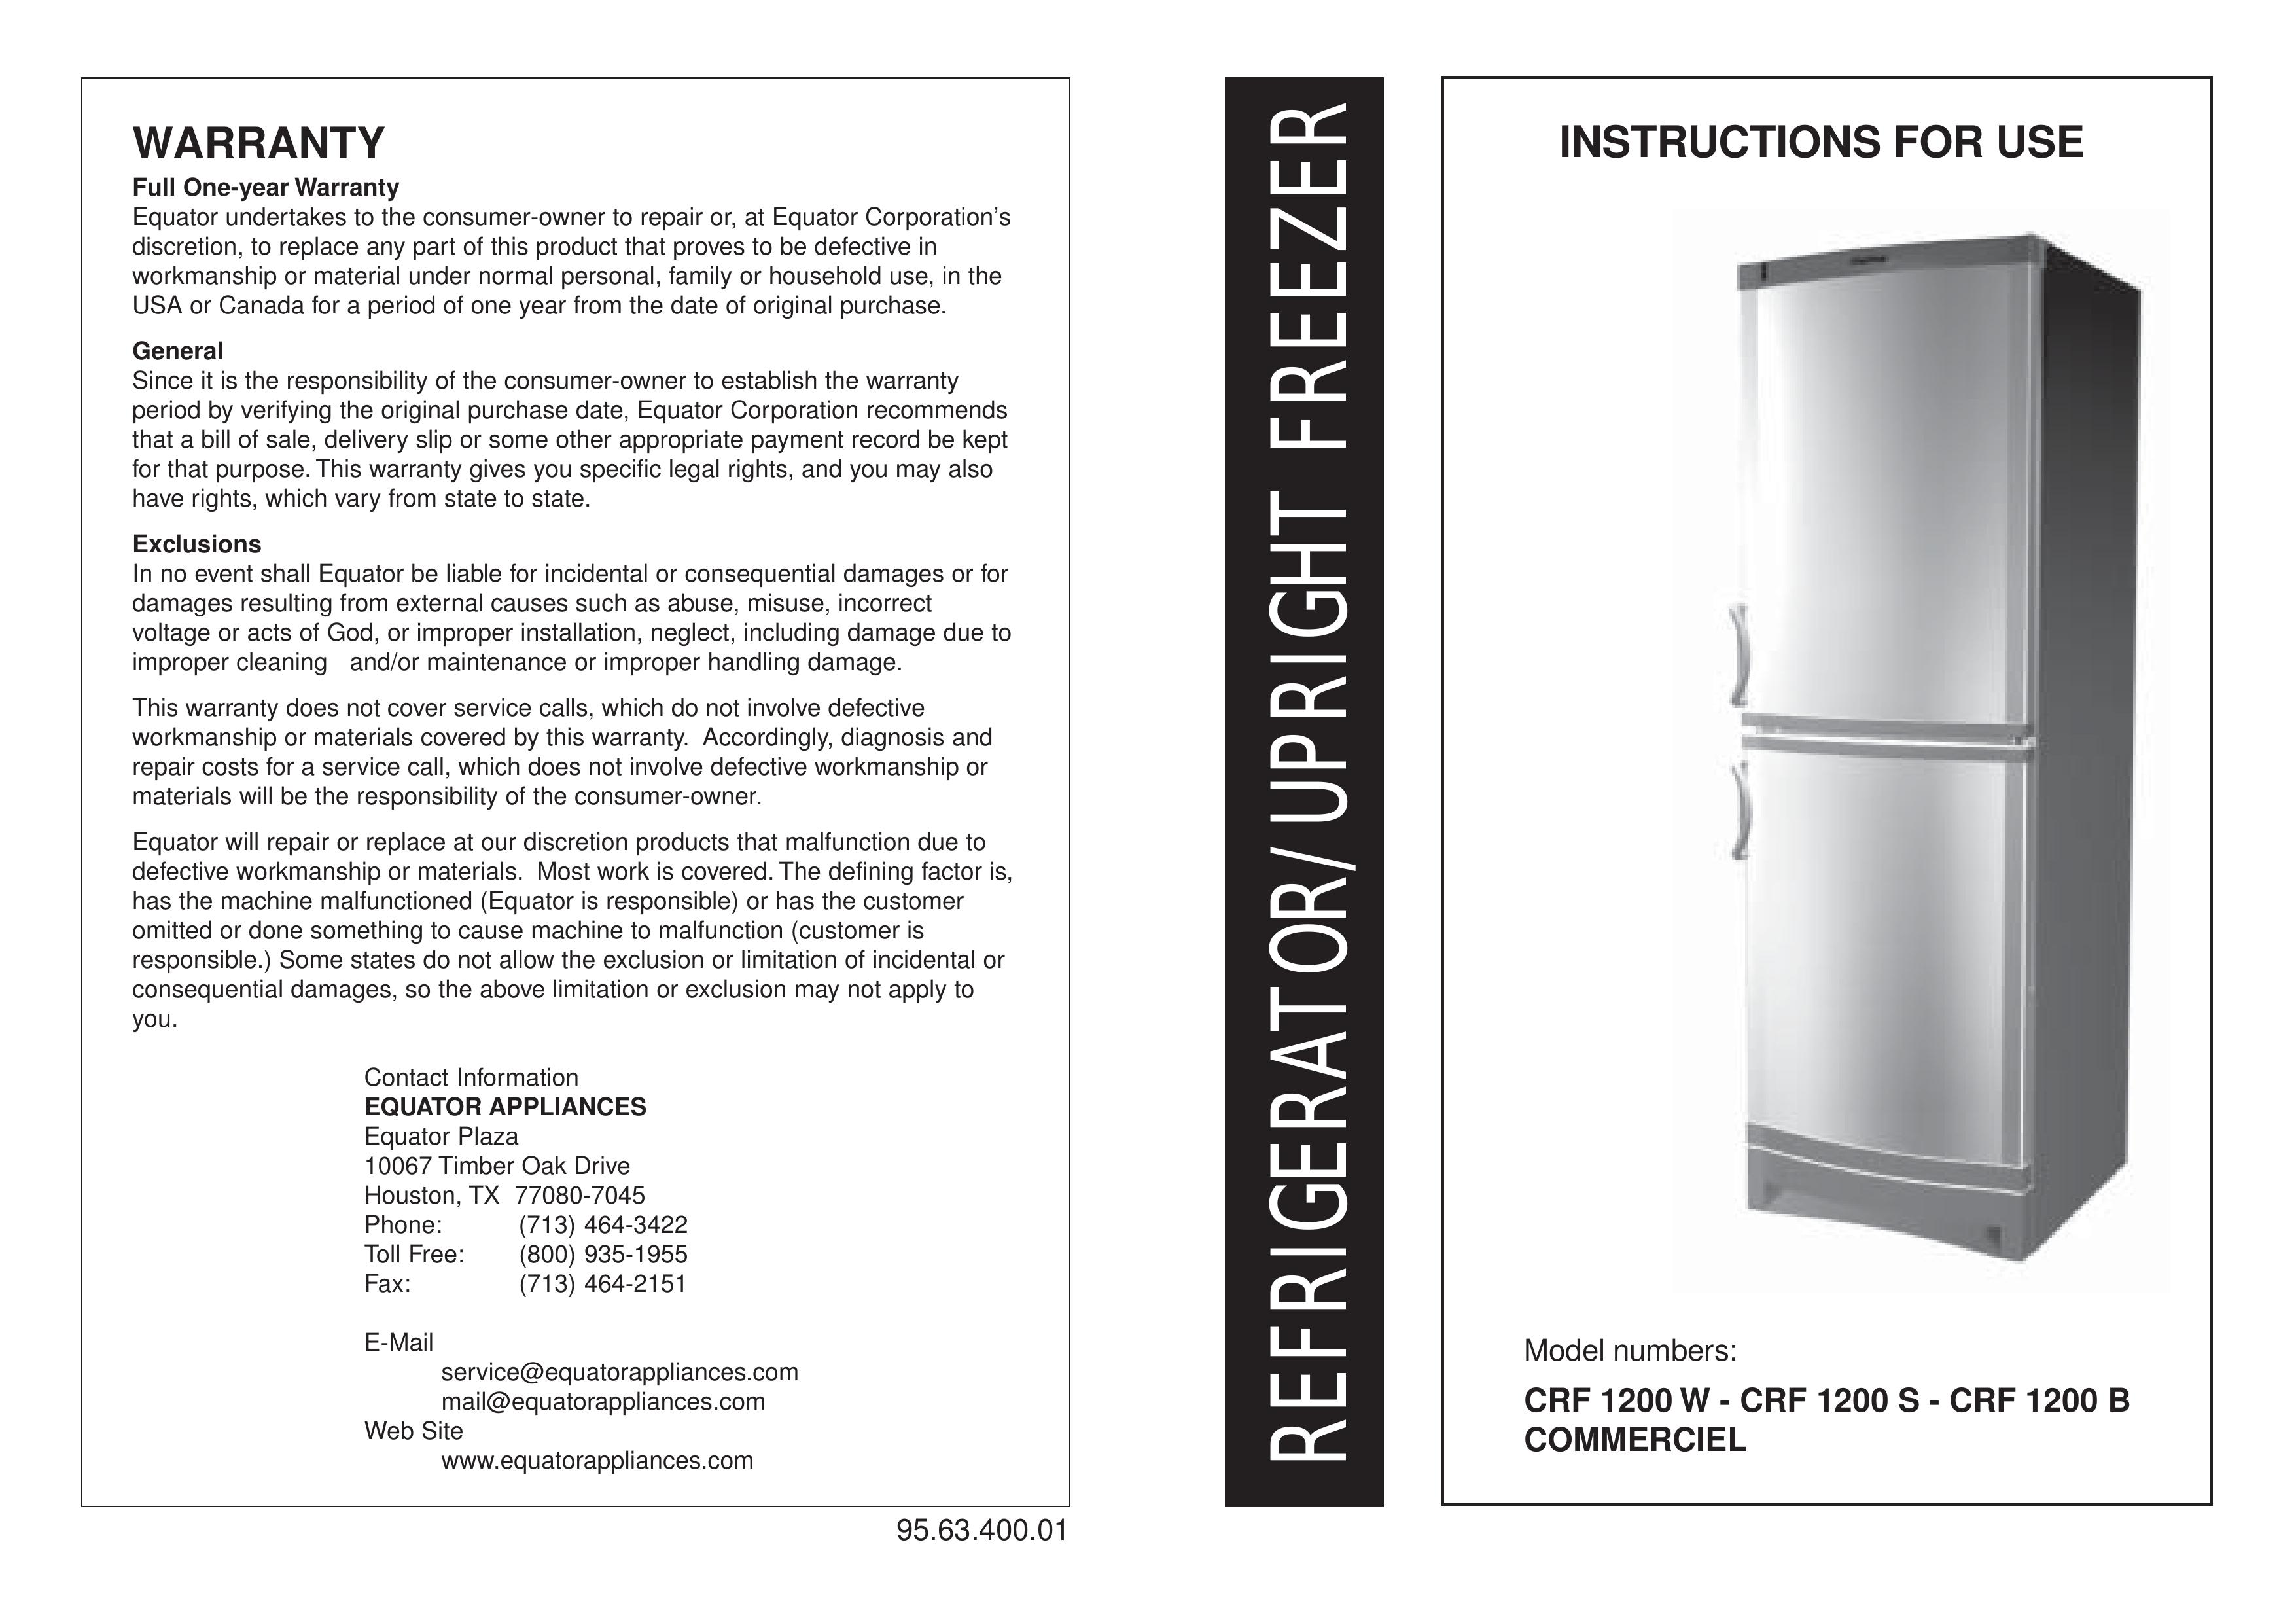 Equator CRF 1200 B Refrigerator User Manual